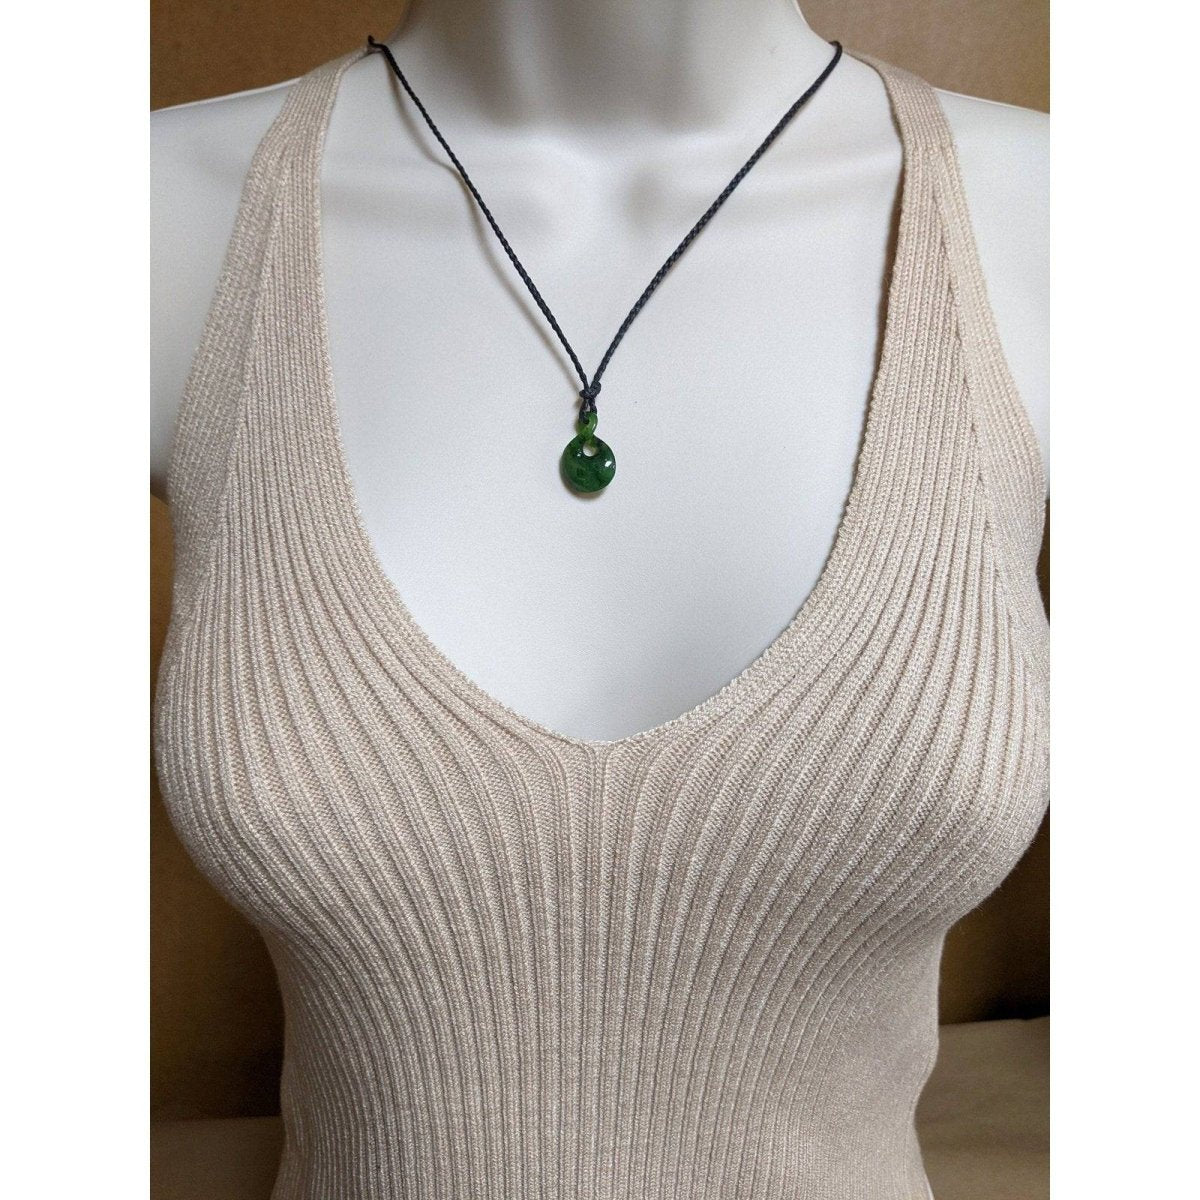 New Zealand Maori Inspired Nephrite Jade Petite Infinity Symbol Necklace - Earthbound Pacific